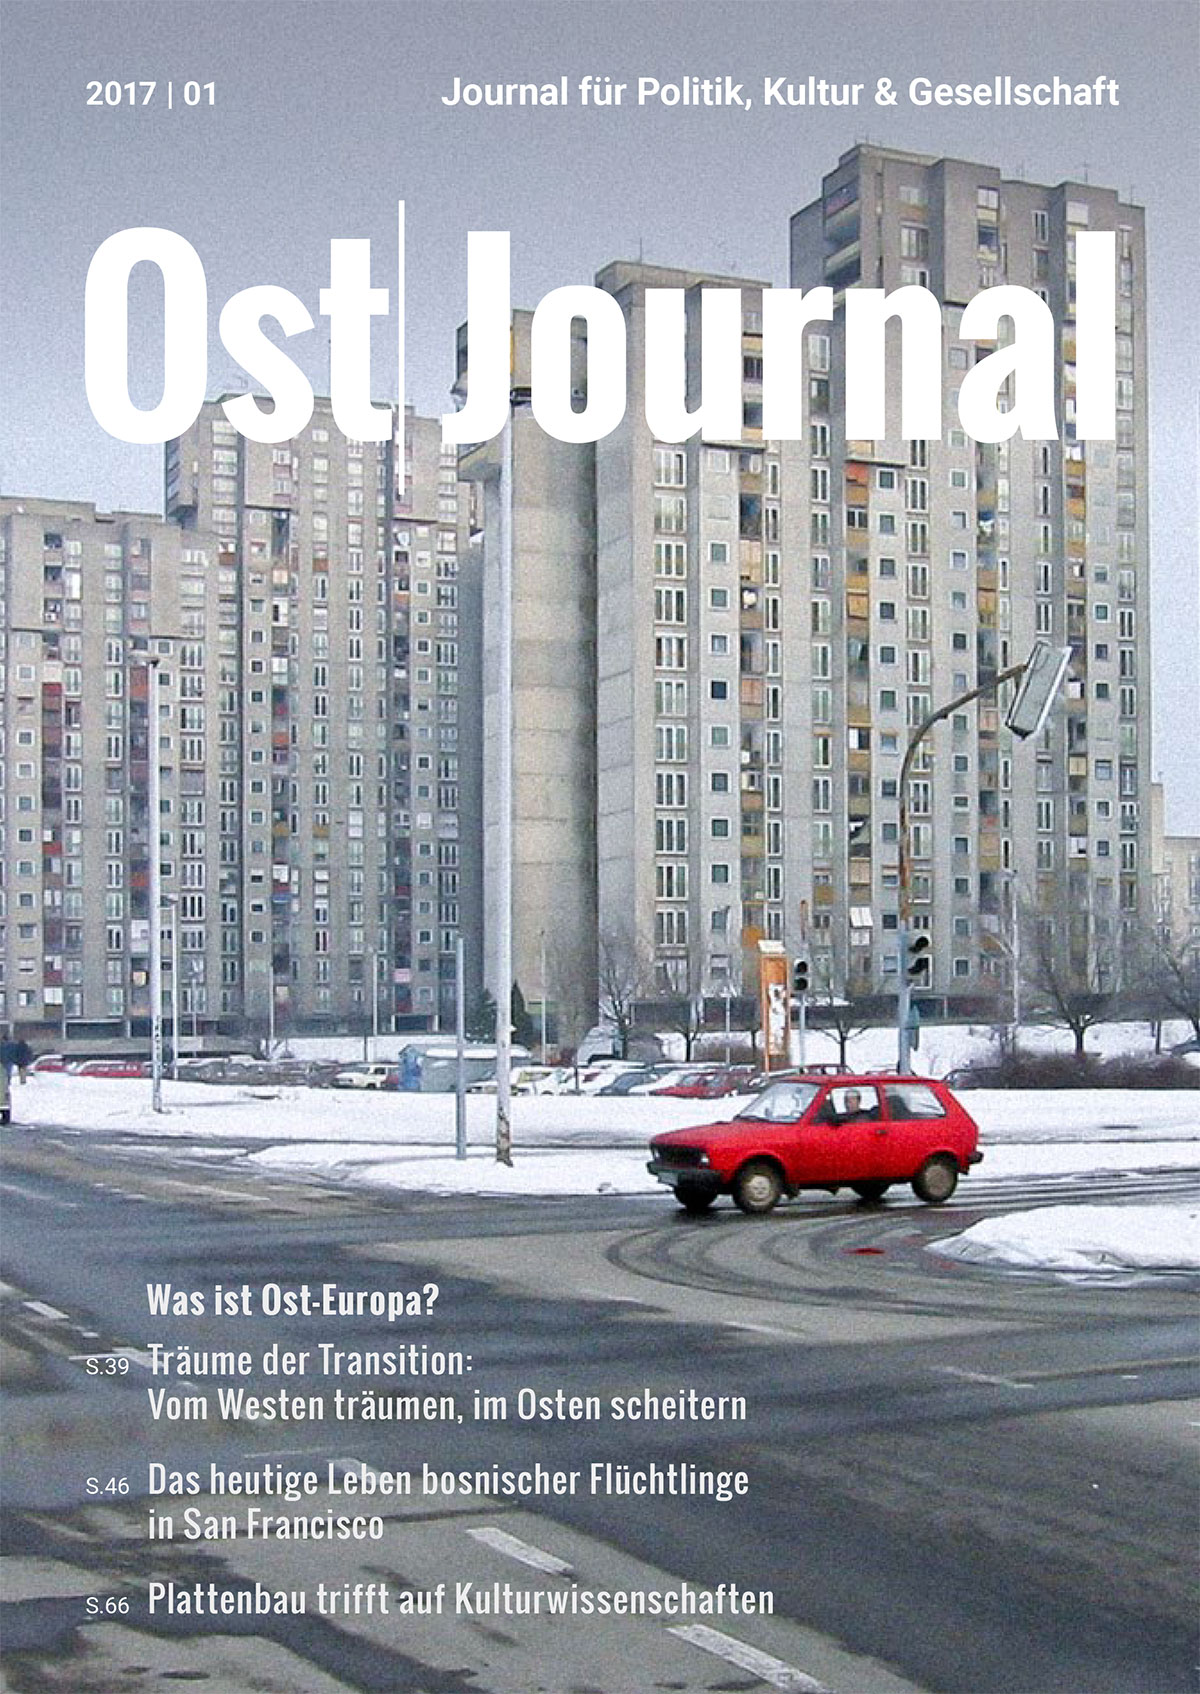 Lost-Journal 01-2017 - Was ist Ost-Europa